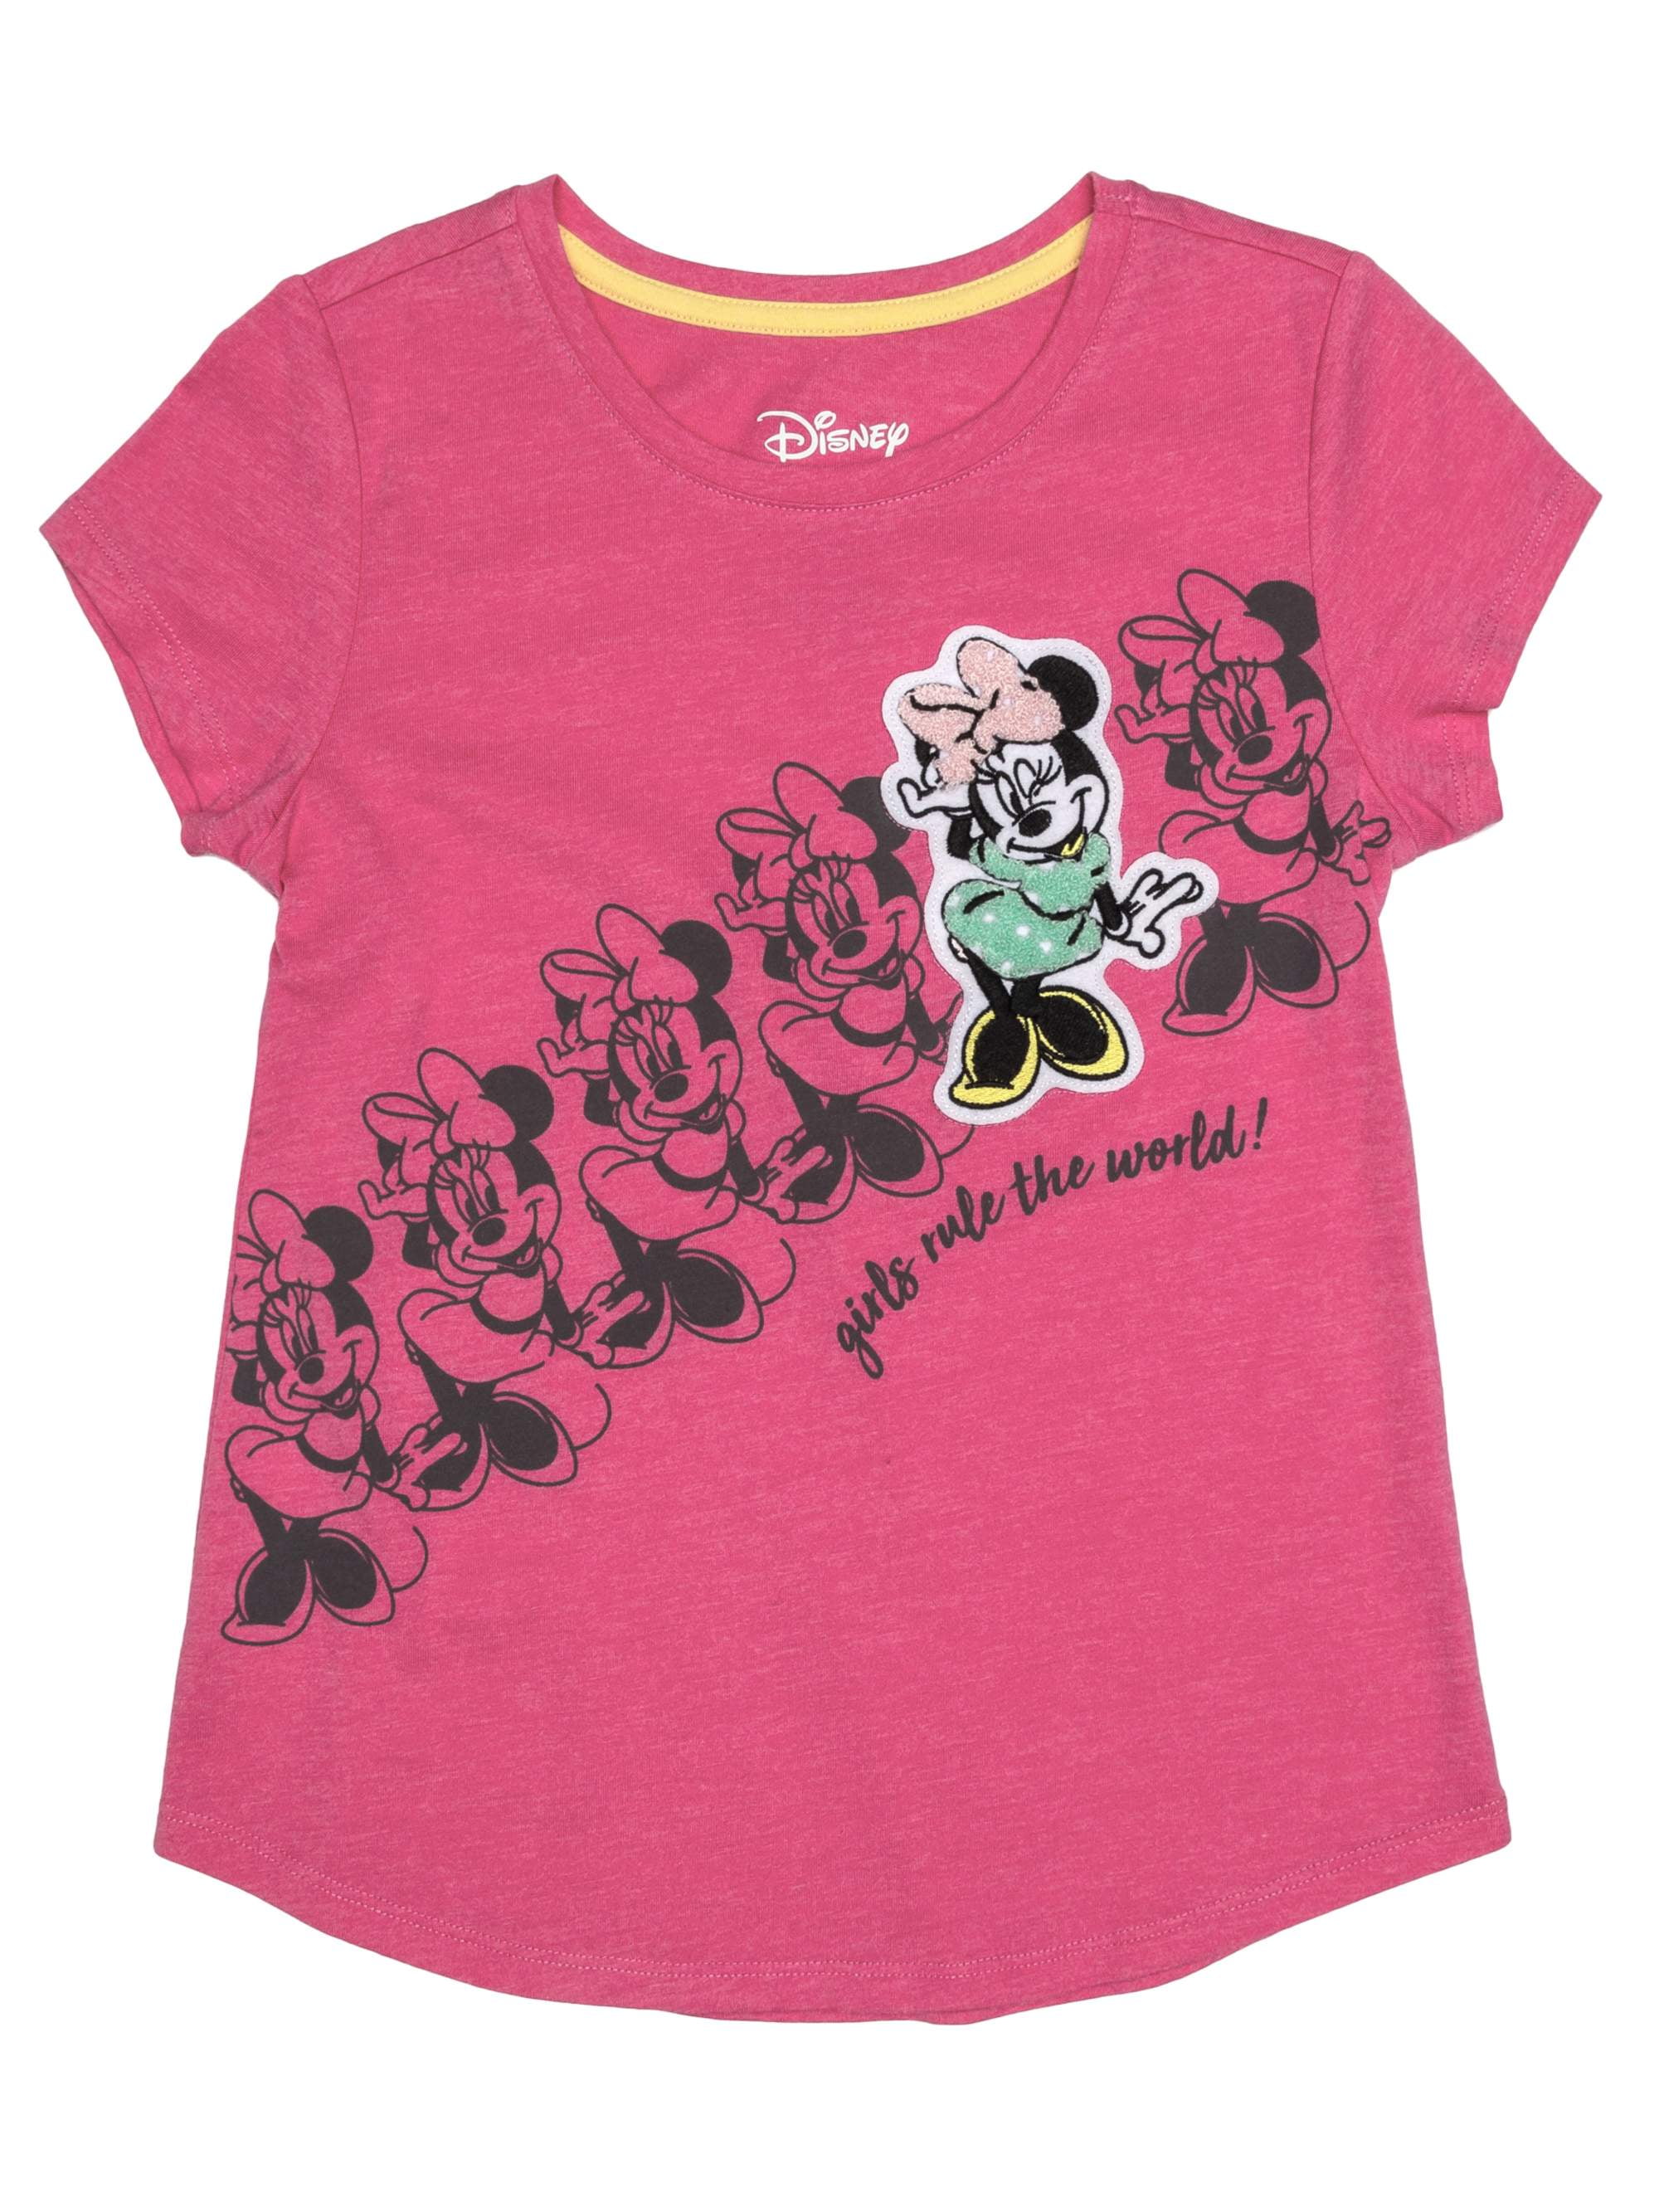 Details about   NWT Disney the Cheetah Girls Short Sleeve SS Shirt Pink & Brown Top Medium 10 12 